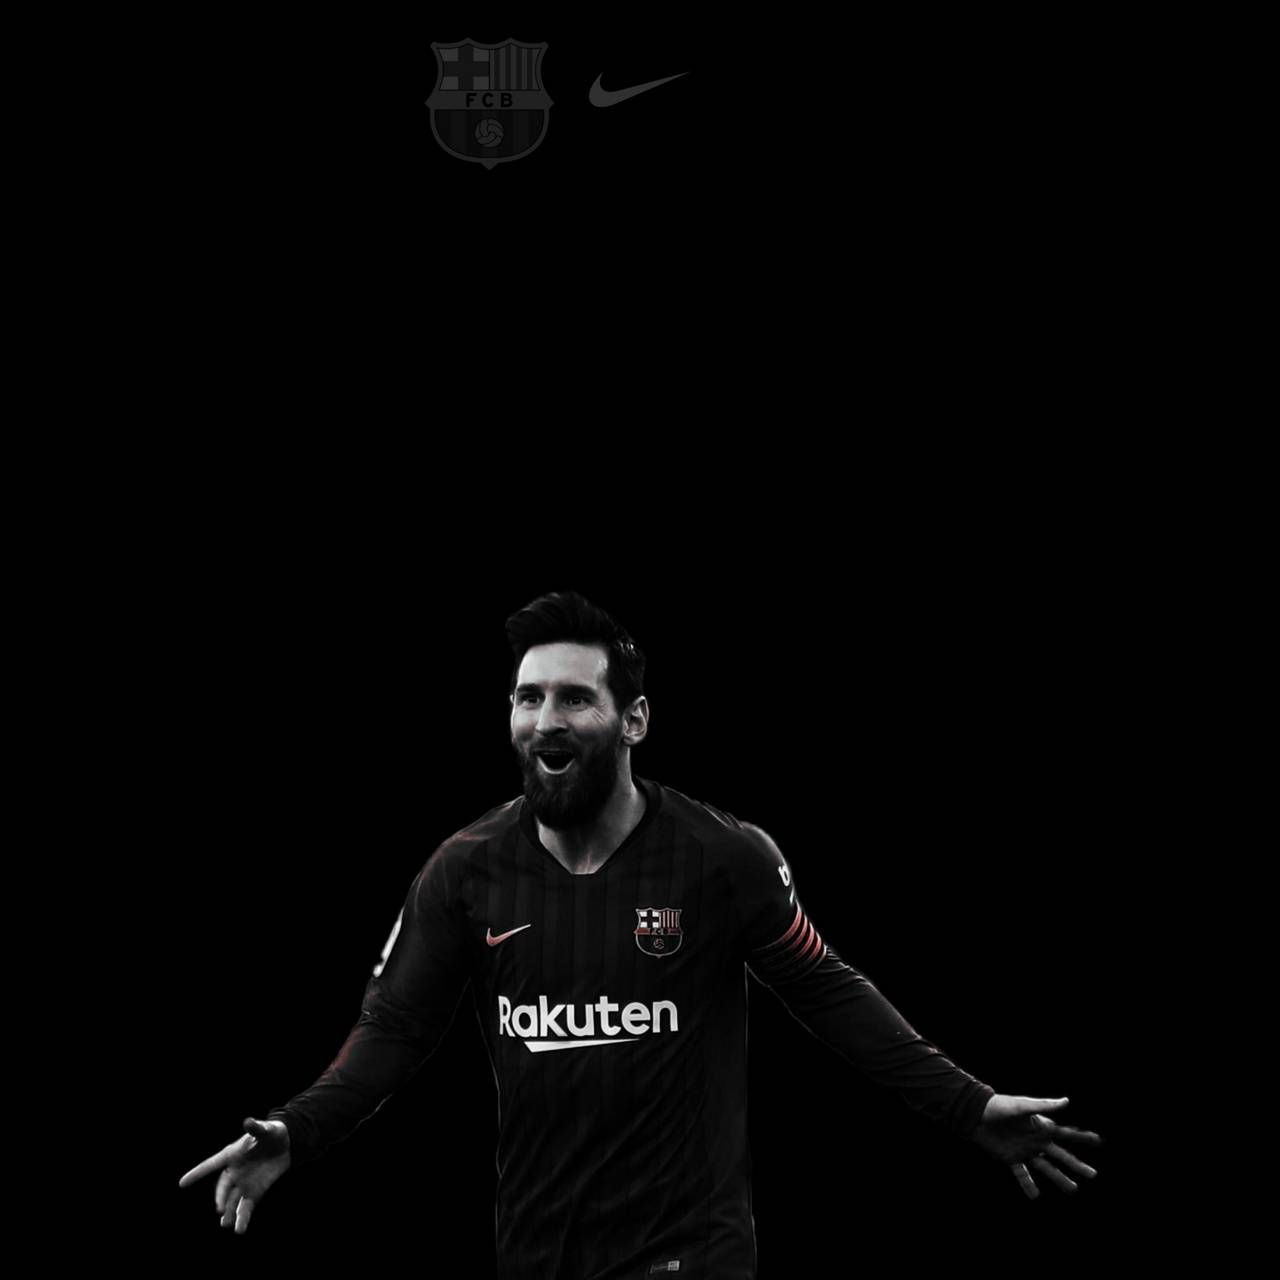 Lionel Messi wallpaper by JorgeBVB - Download on ZEDGE™ | 2428